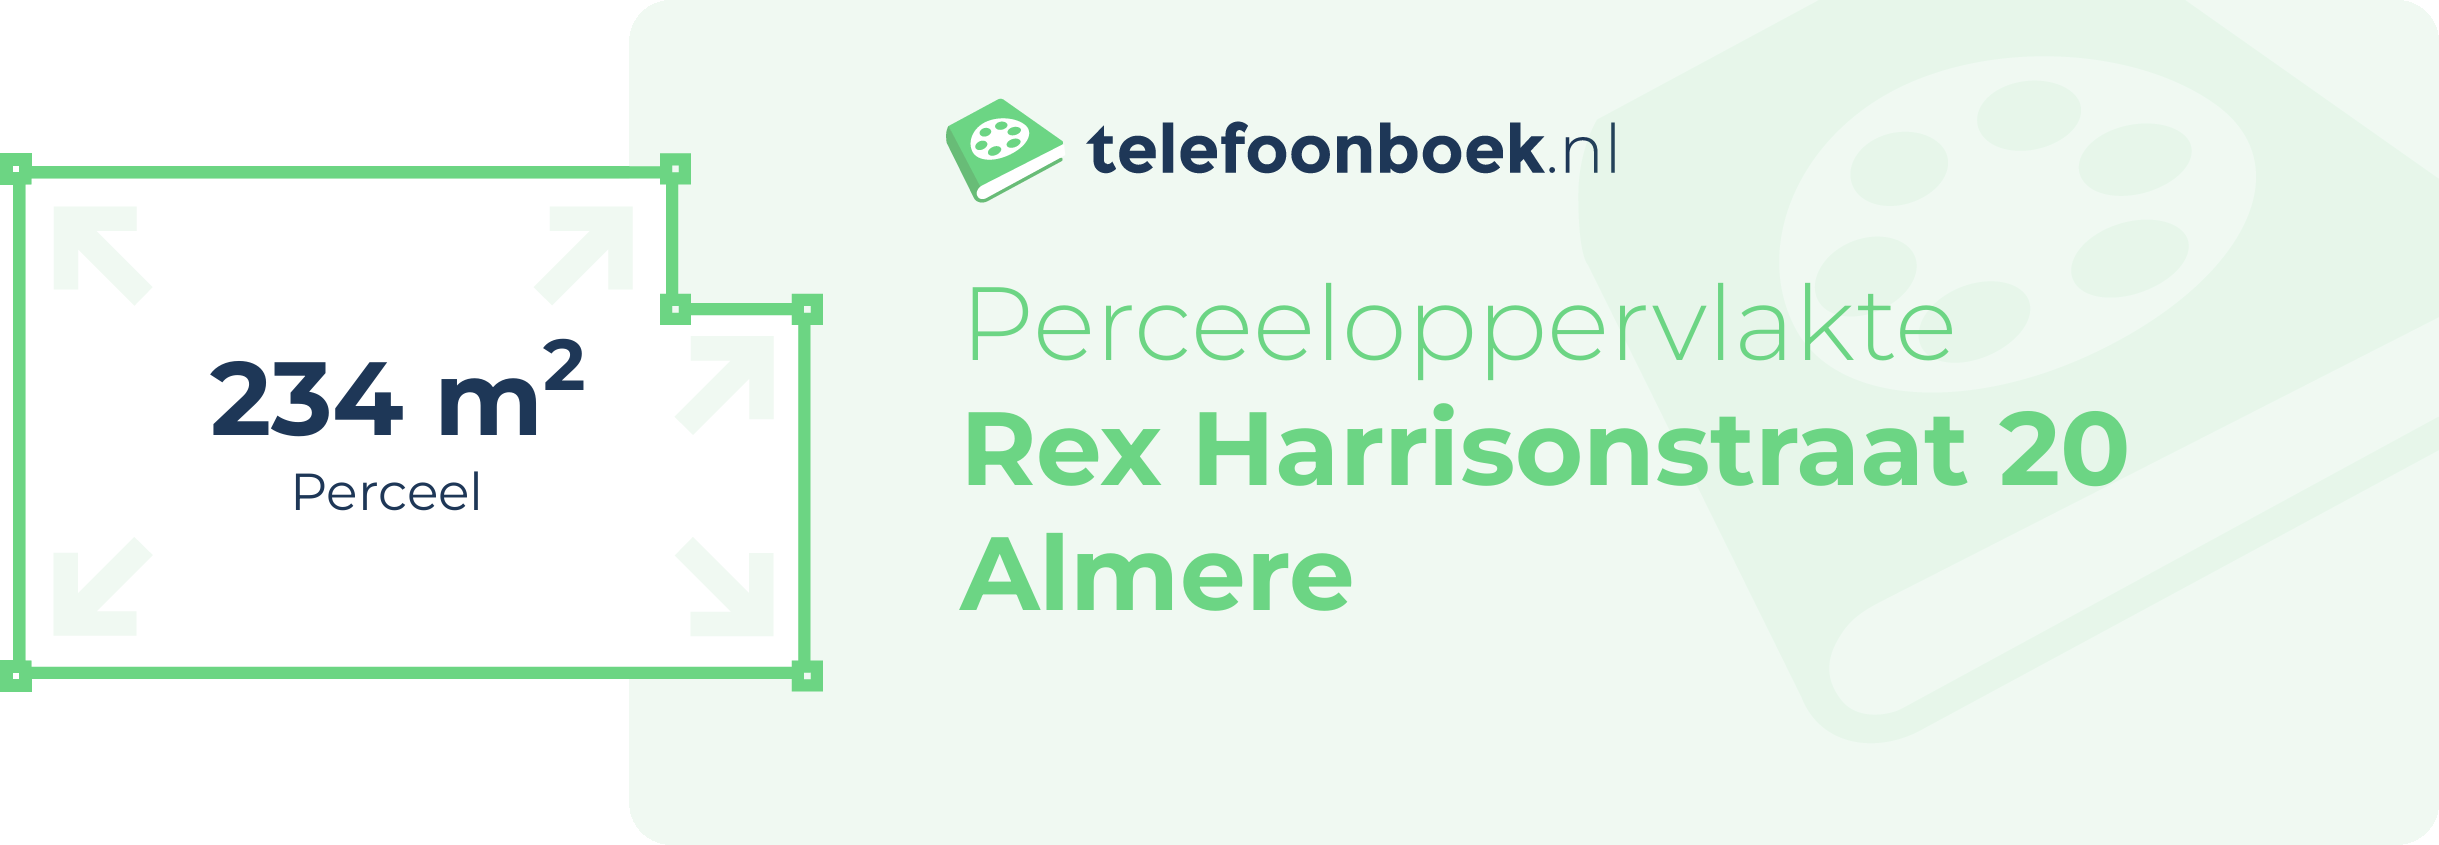 Perceeloppervlakte Rex Harrisonstraat 20 Almere